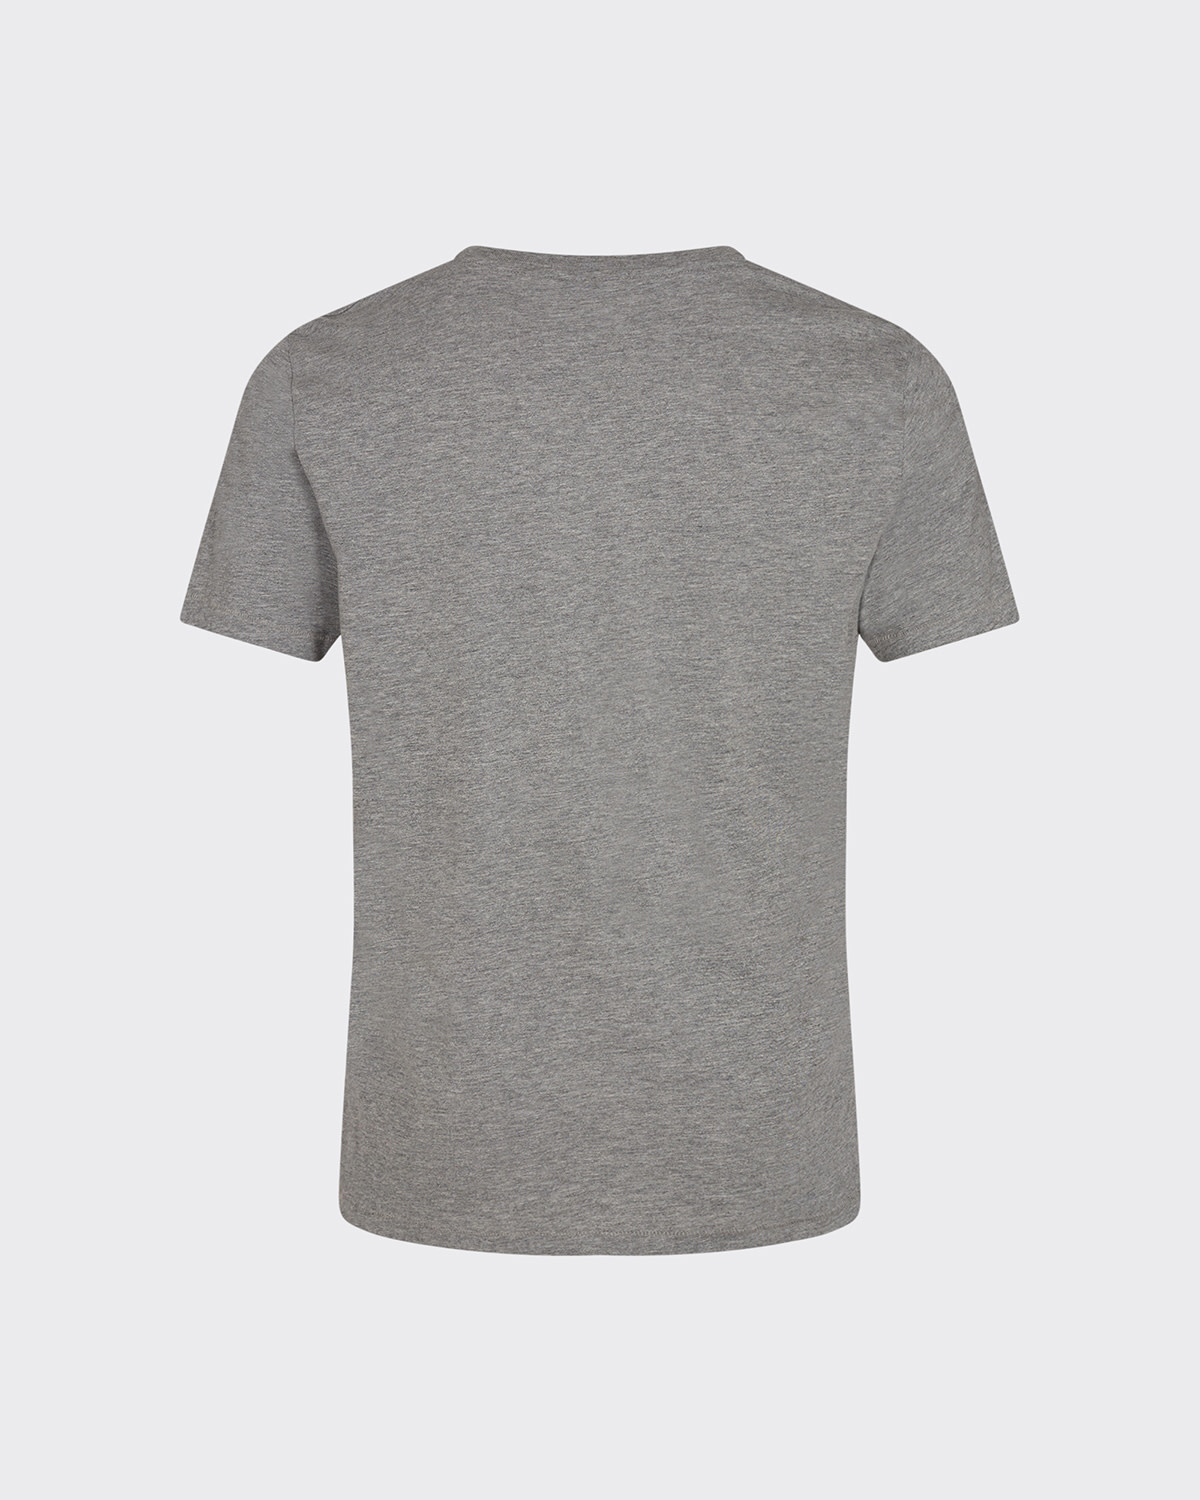 Minimum Minimum, Luka T-Shirt, light grey, S